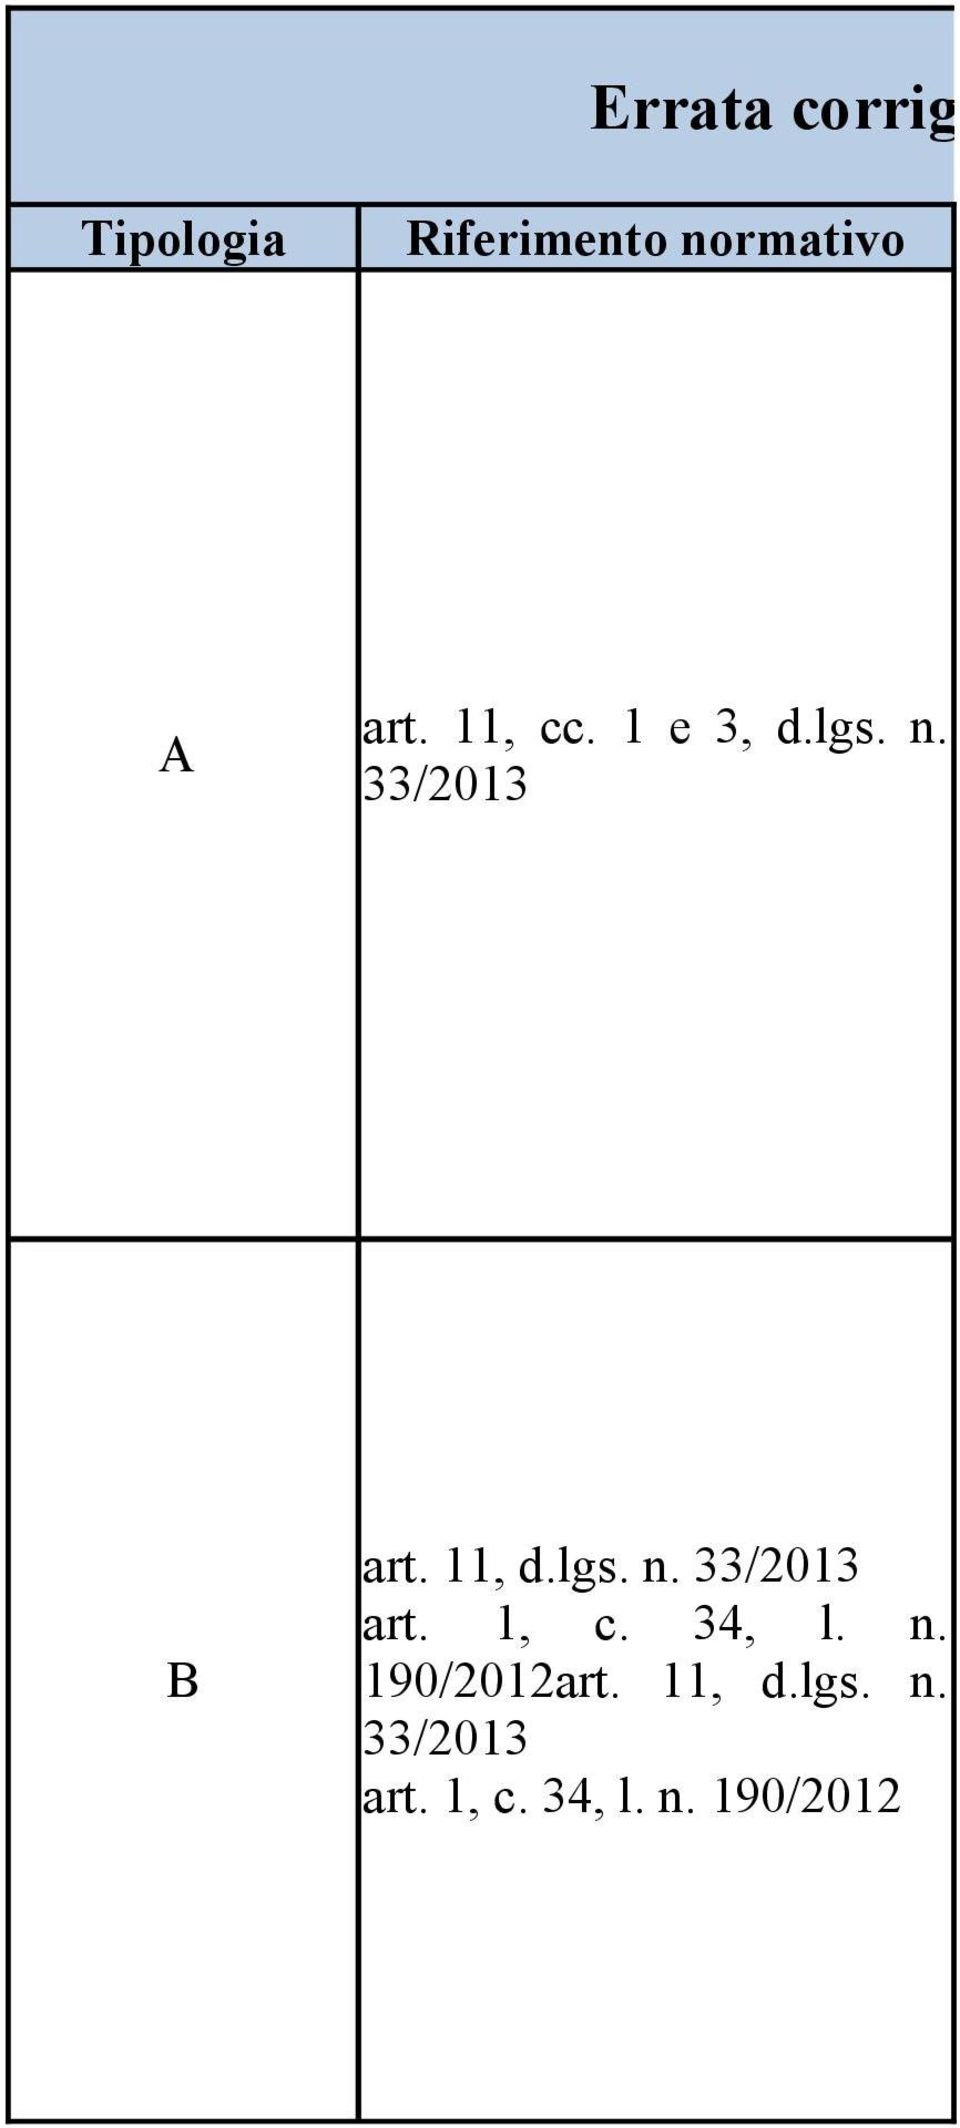 (settembre 2013) Riferimento normativo A art. 11, cc. 1 e 3, d.lgs. n. B art.